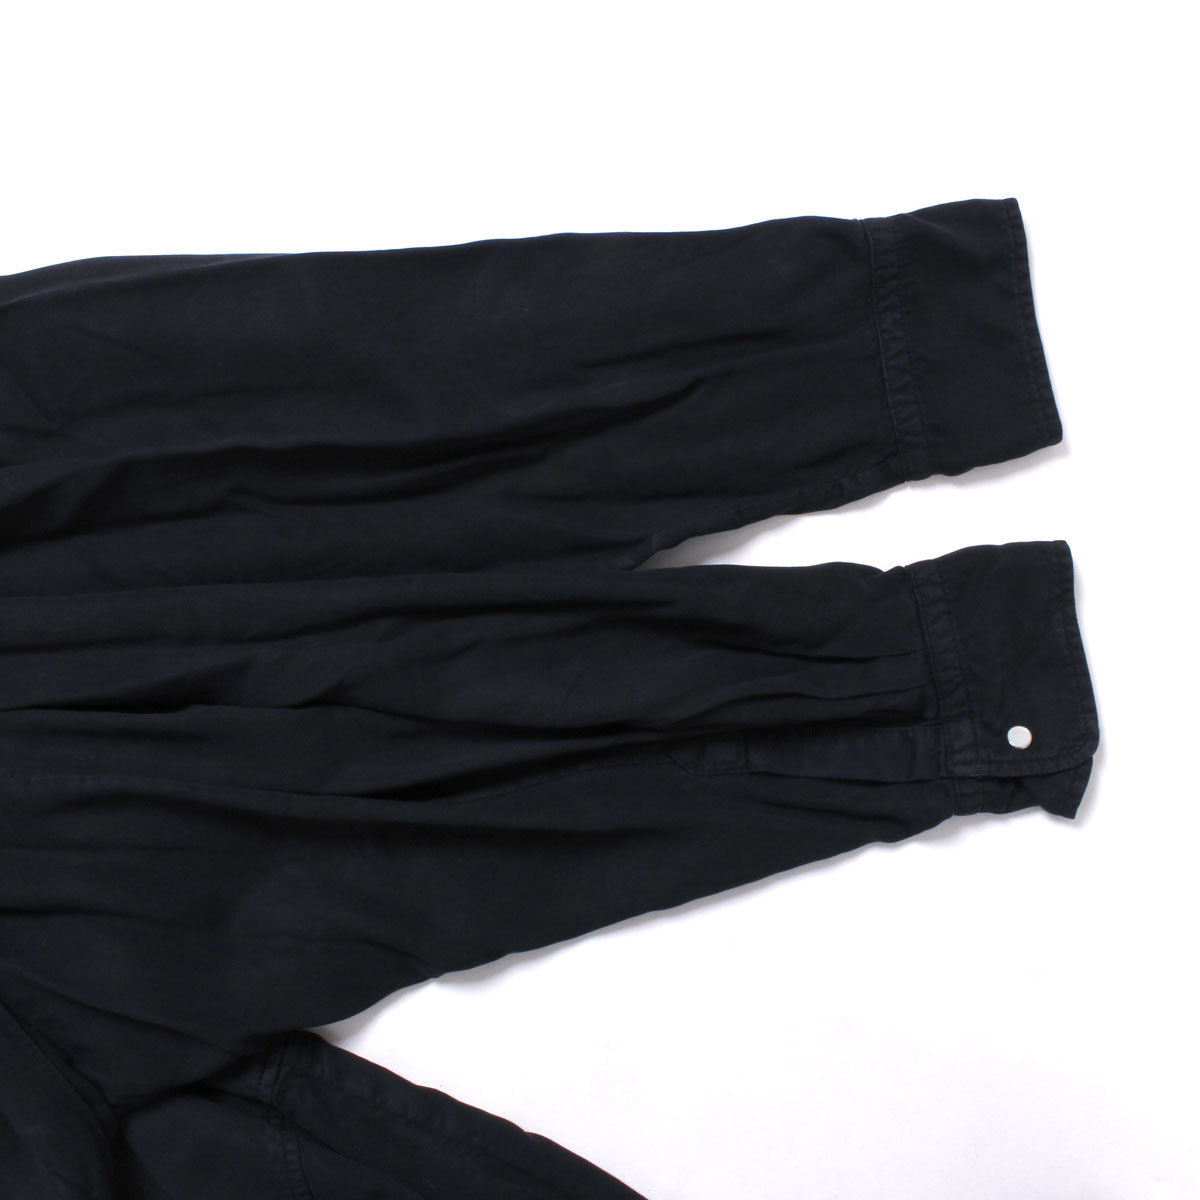 20AW【タグ付き・新品・定価119,000円】ISABEL MARANT NAVEEN DRESS size38 FADED BLACK イザベルマラン シャツワンピース - 6